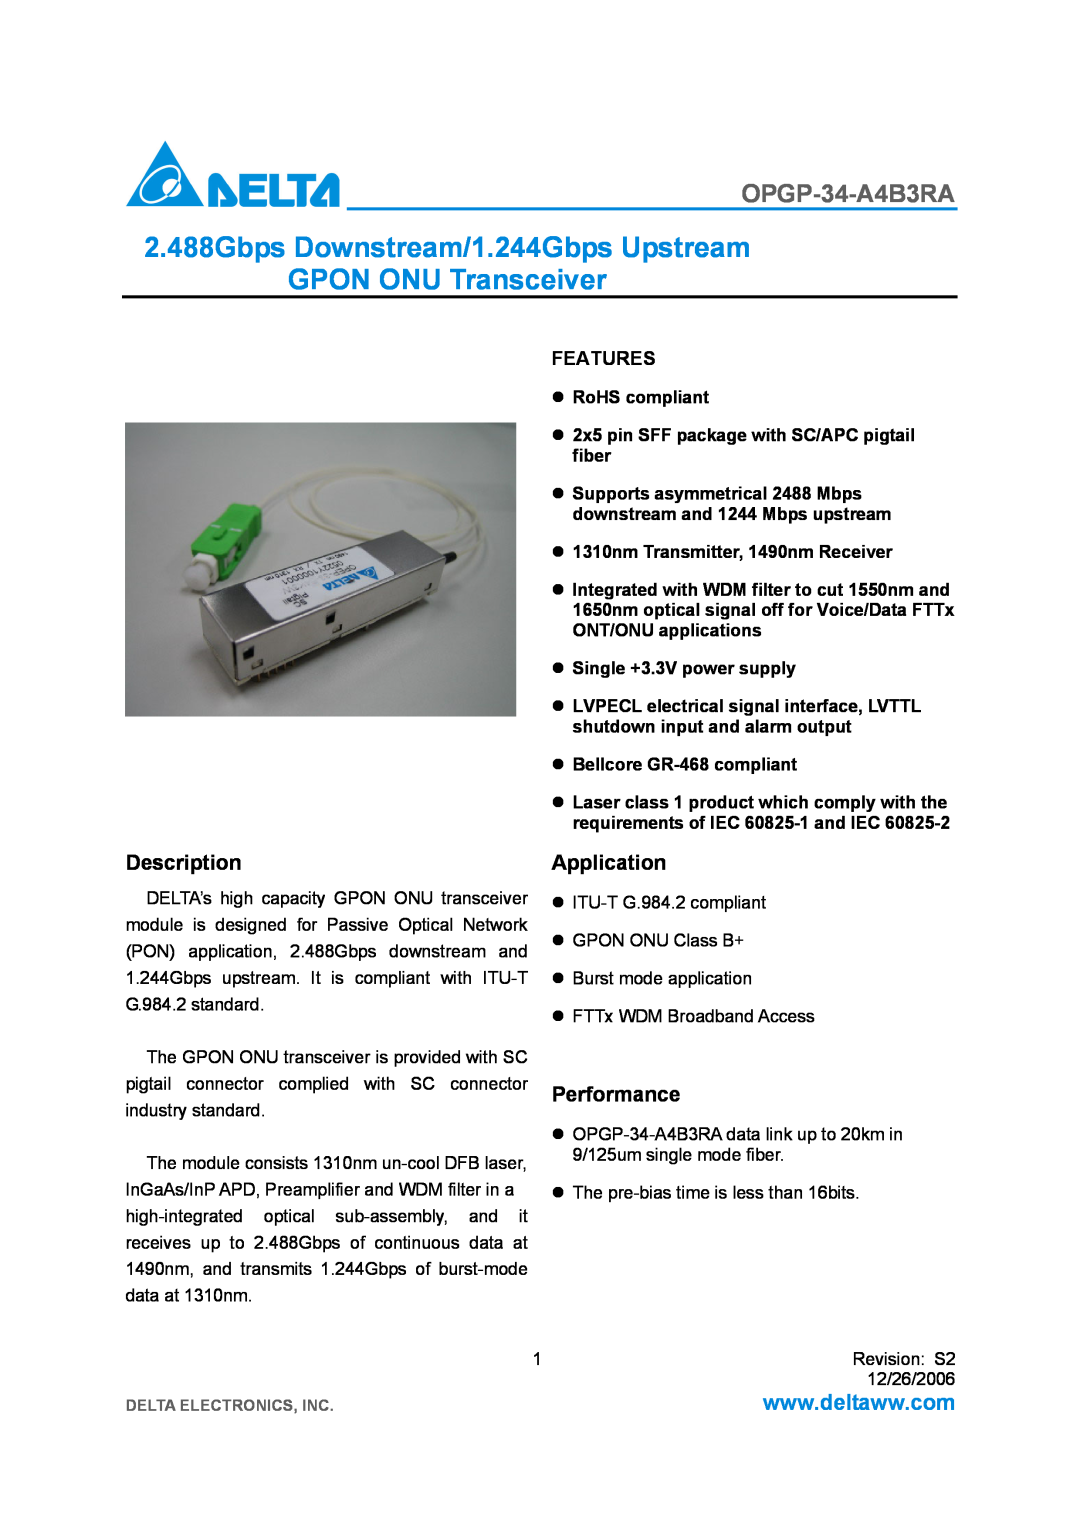 Delta Electronics OPGP-34-A4B3RA manual Description, Performance, Features, Application 